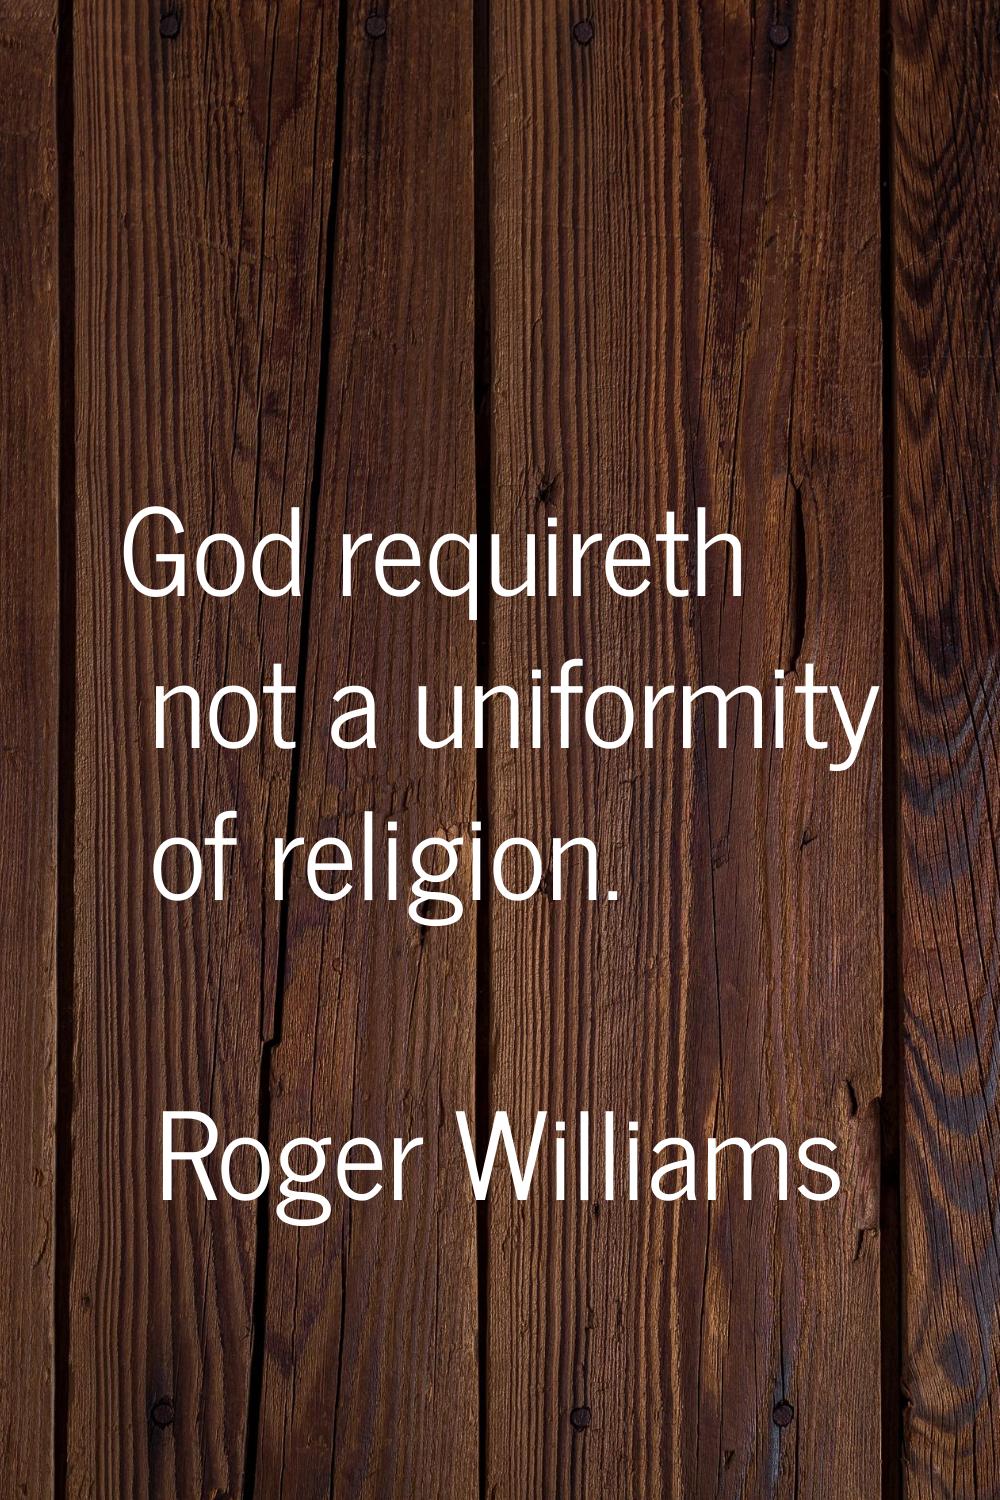 God requireth not a uniformity of religion.